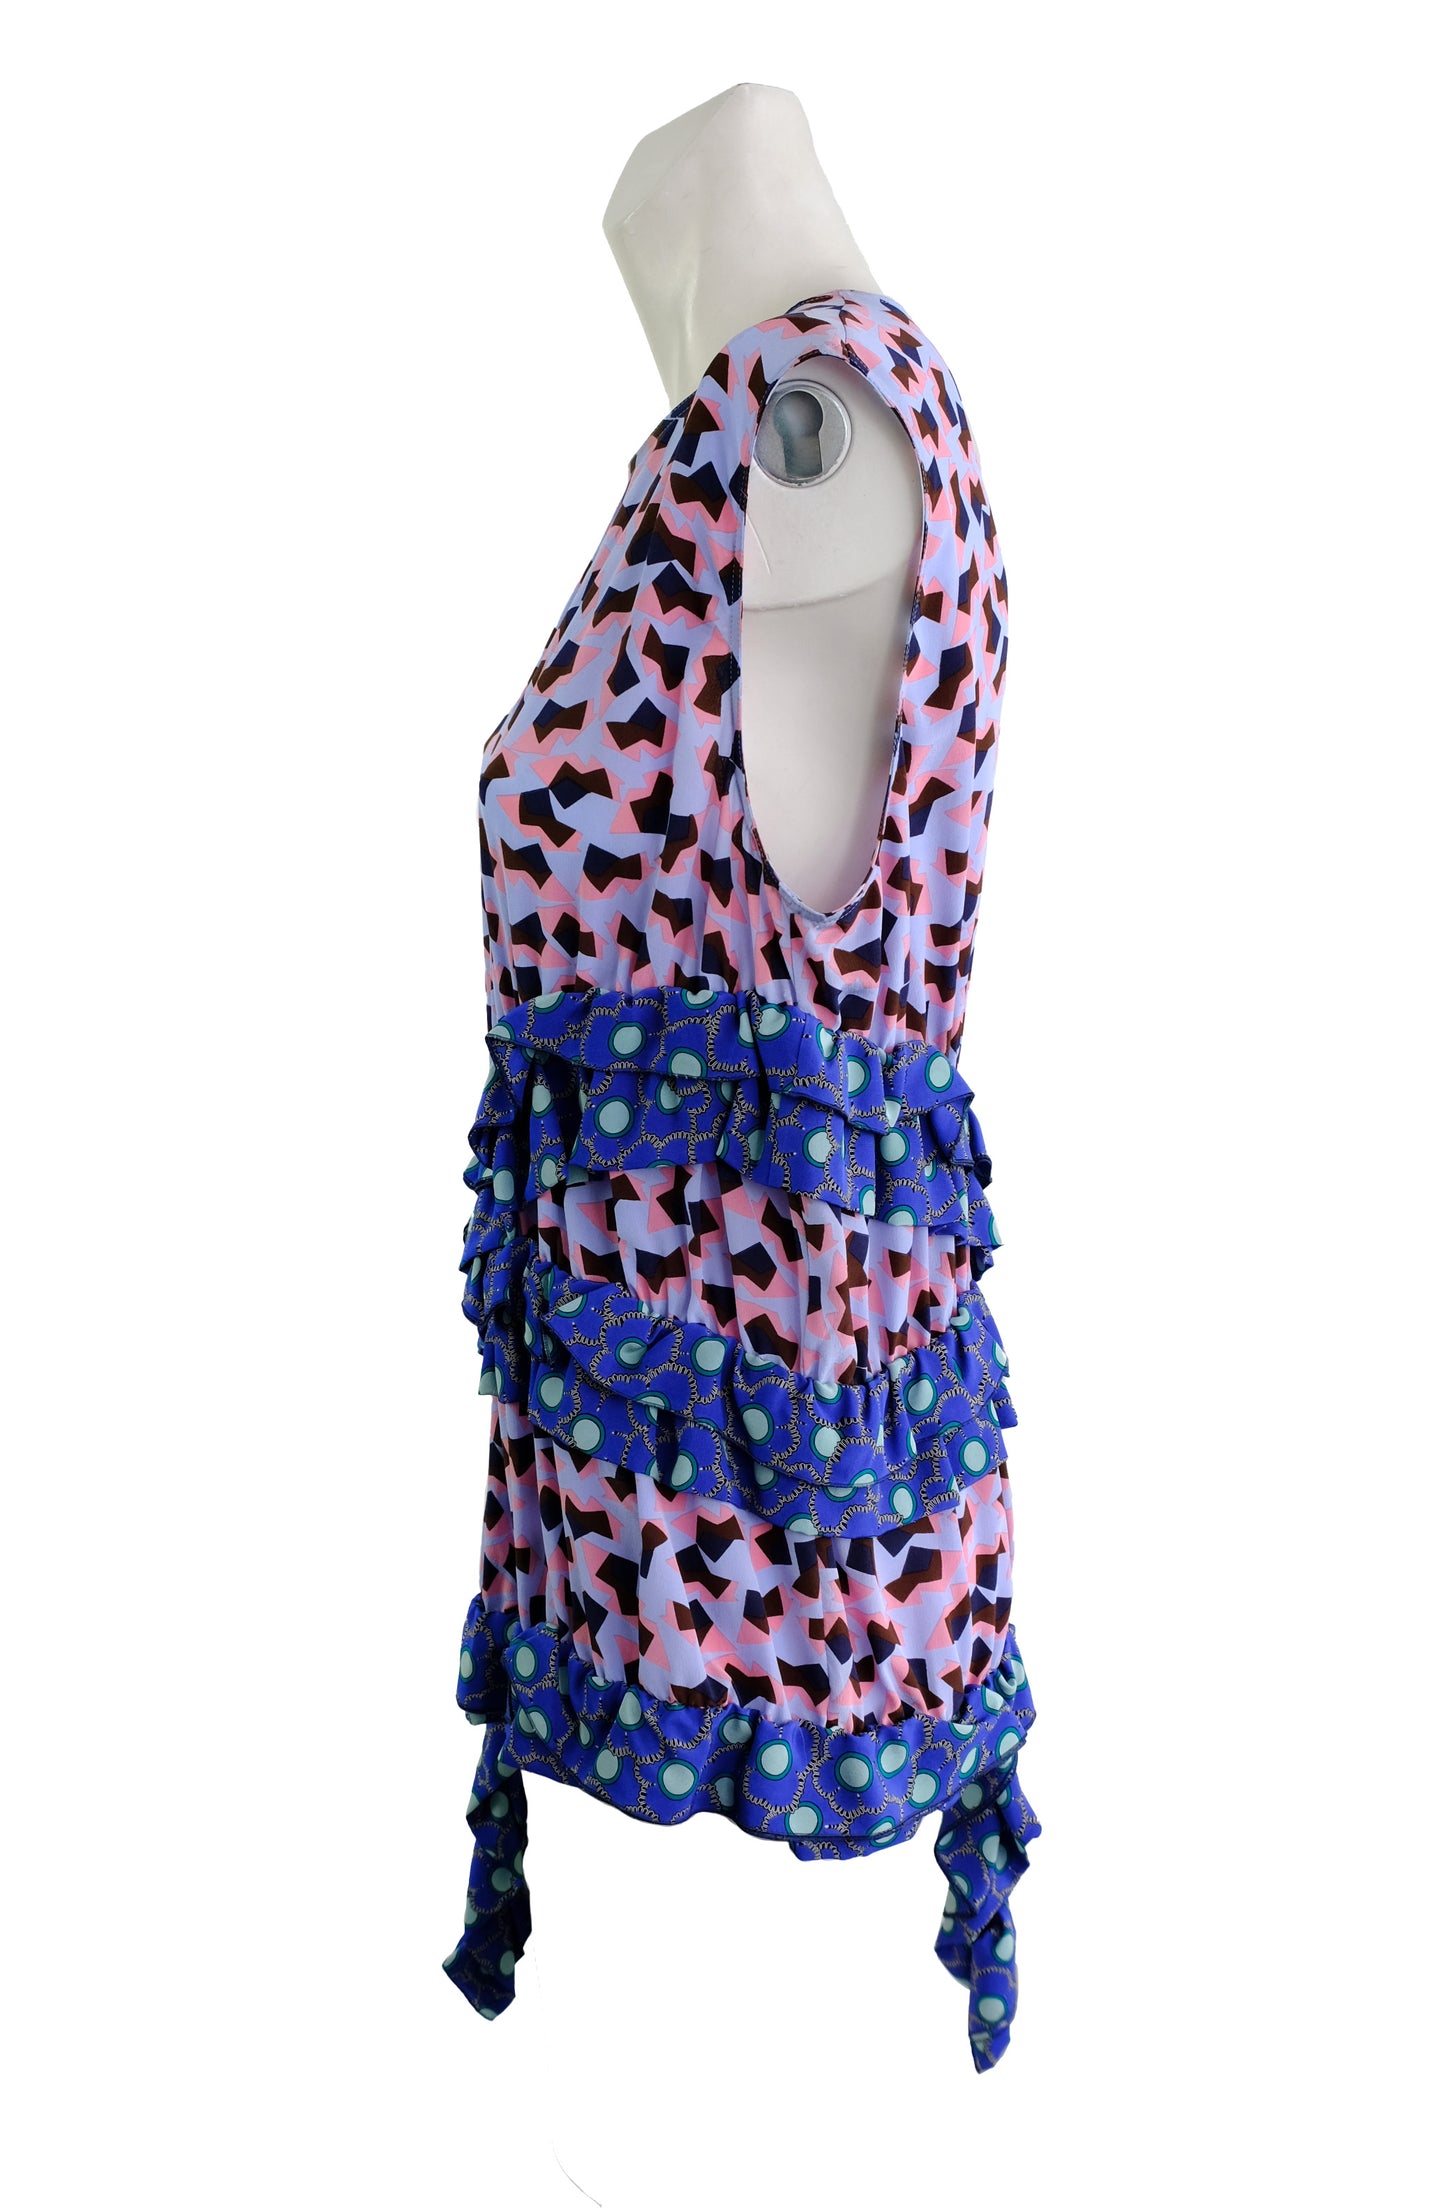 Marni Sleeveless Ruffle Top in Blue and Pink Print Silk, UK14